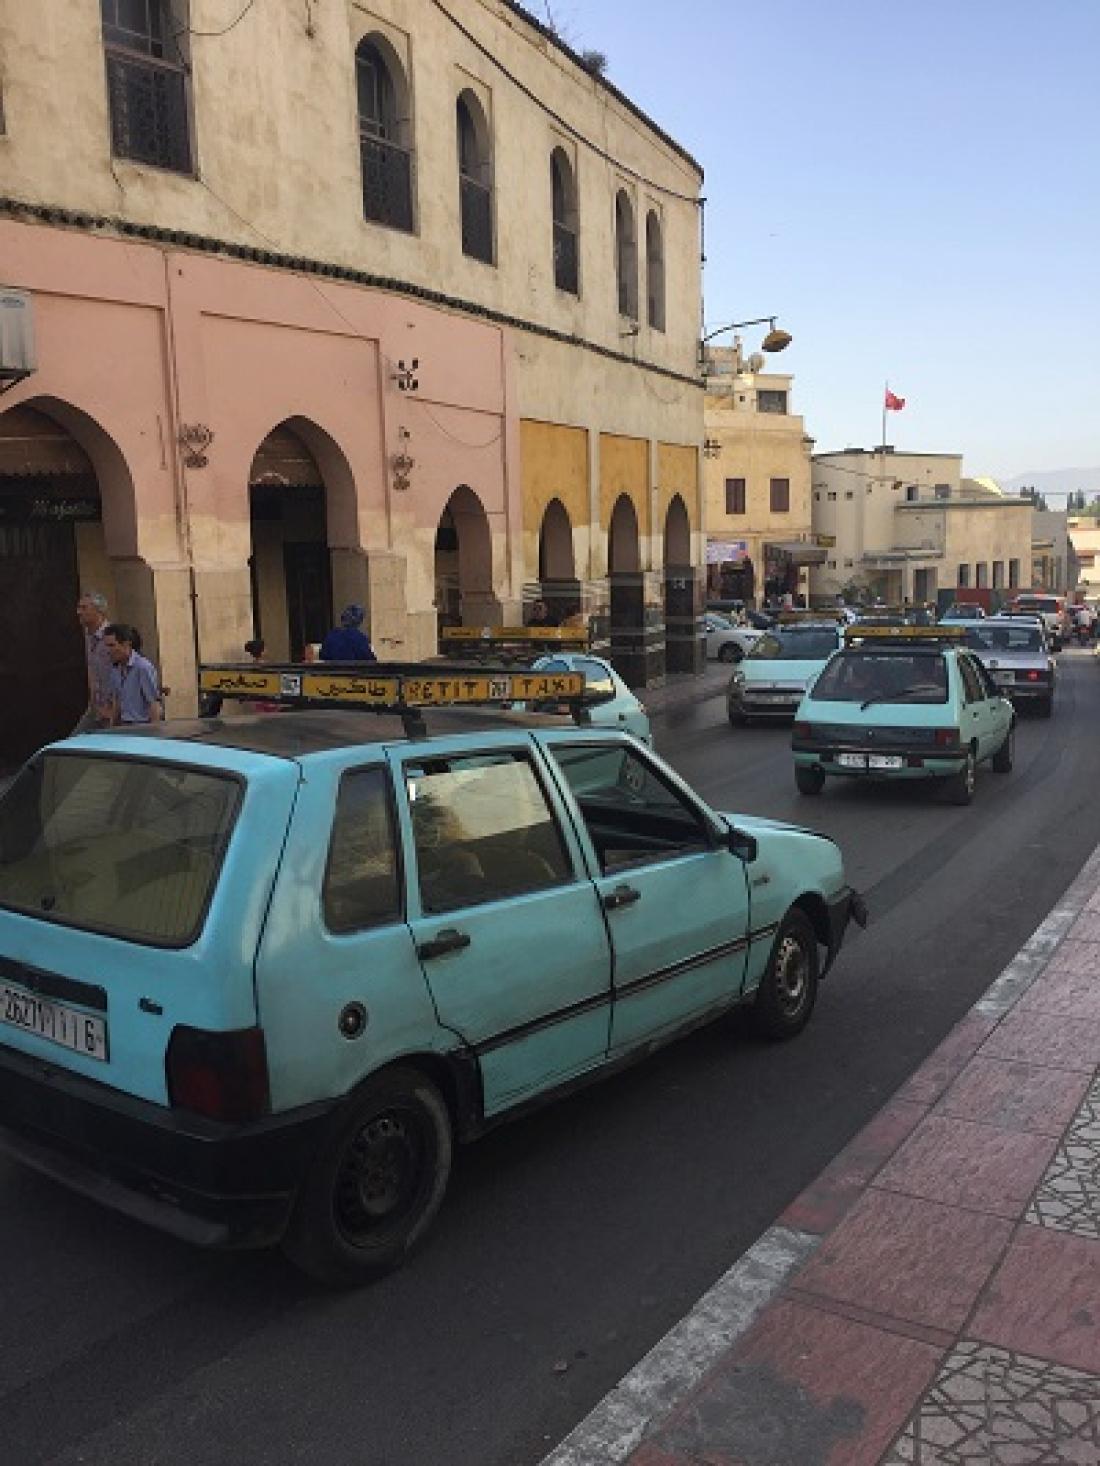 Petit taxis in Marrekech, Morocco